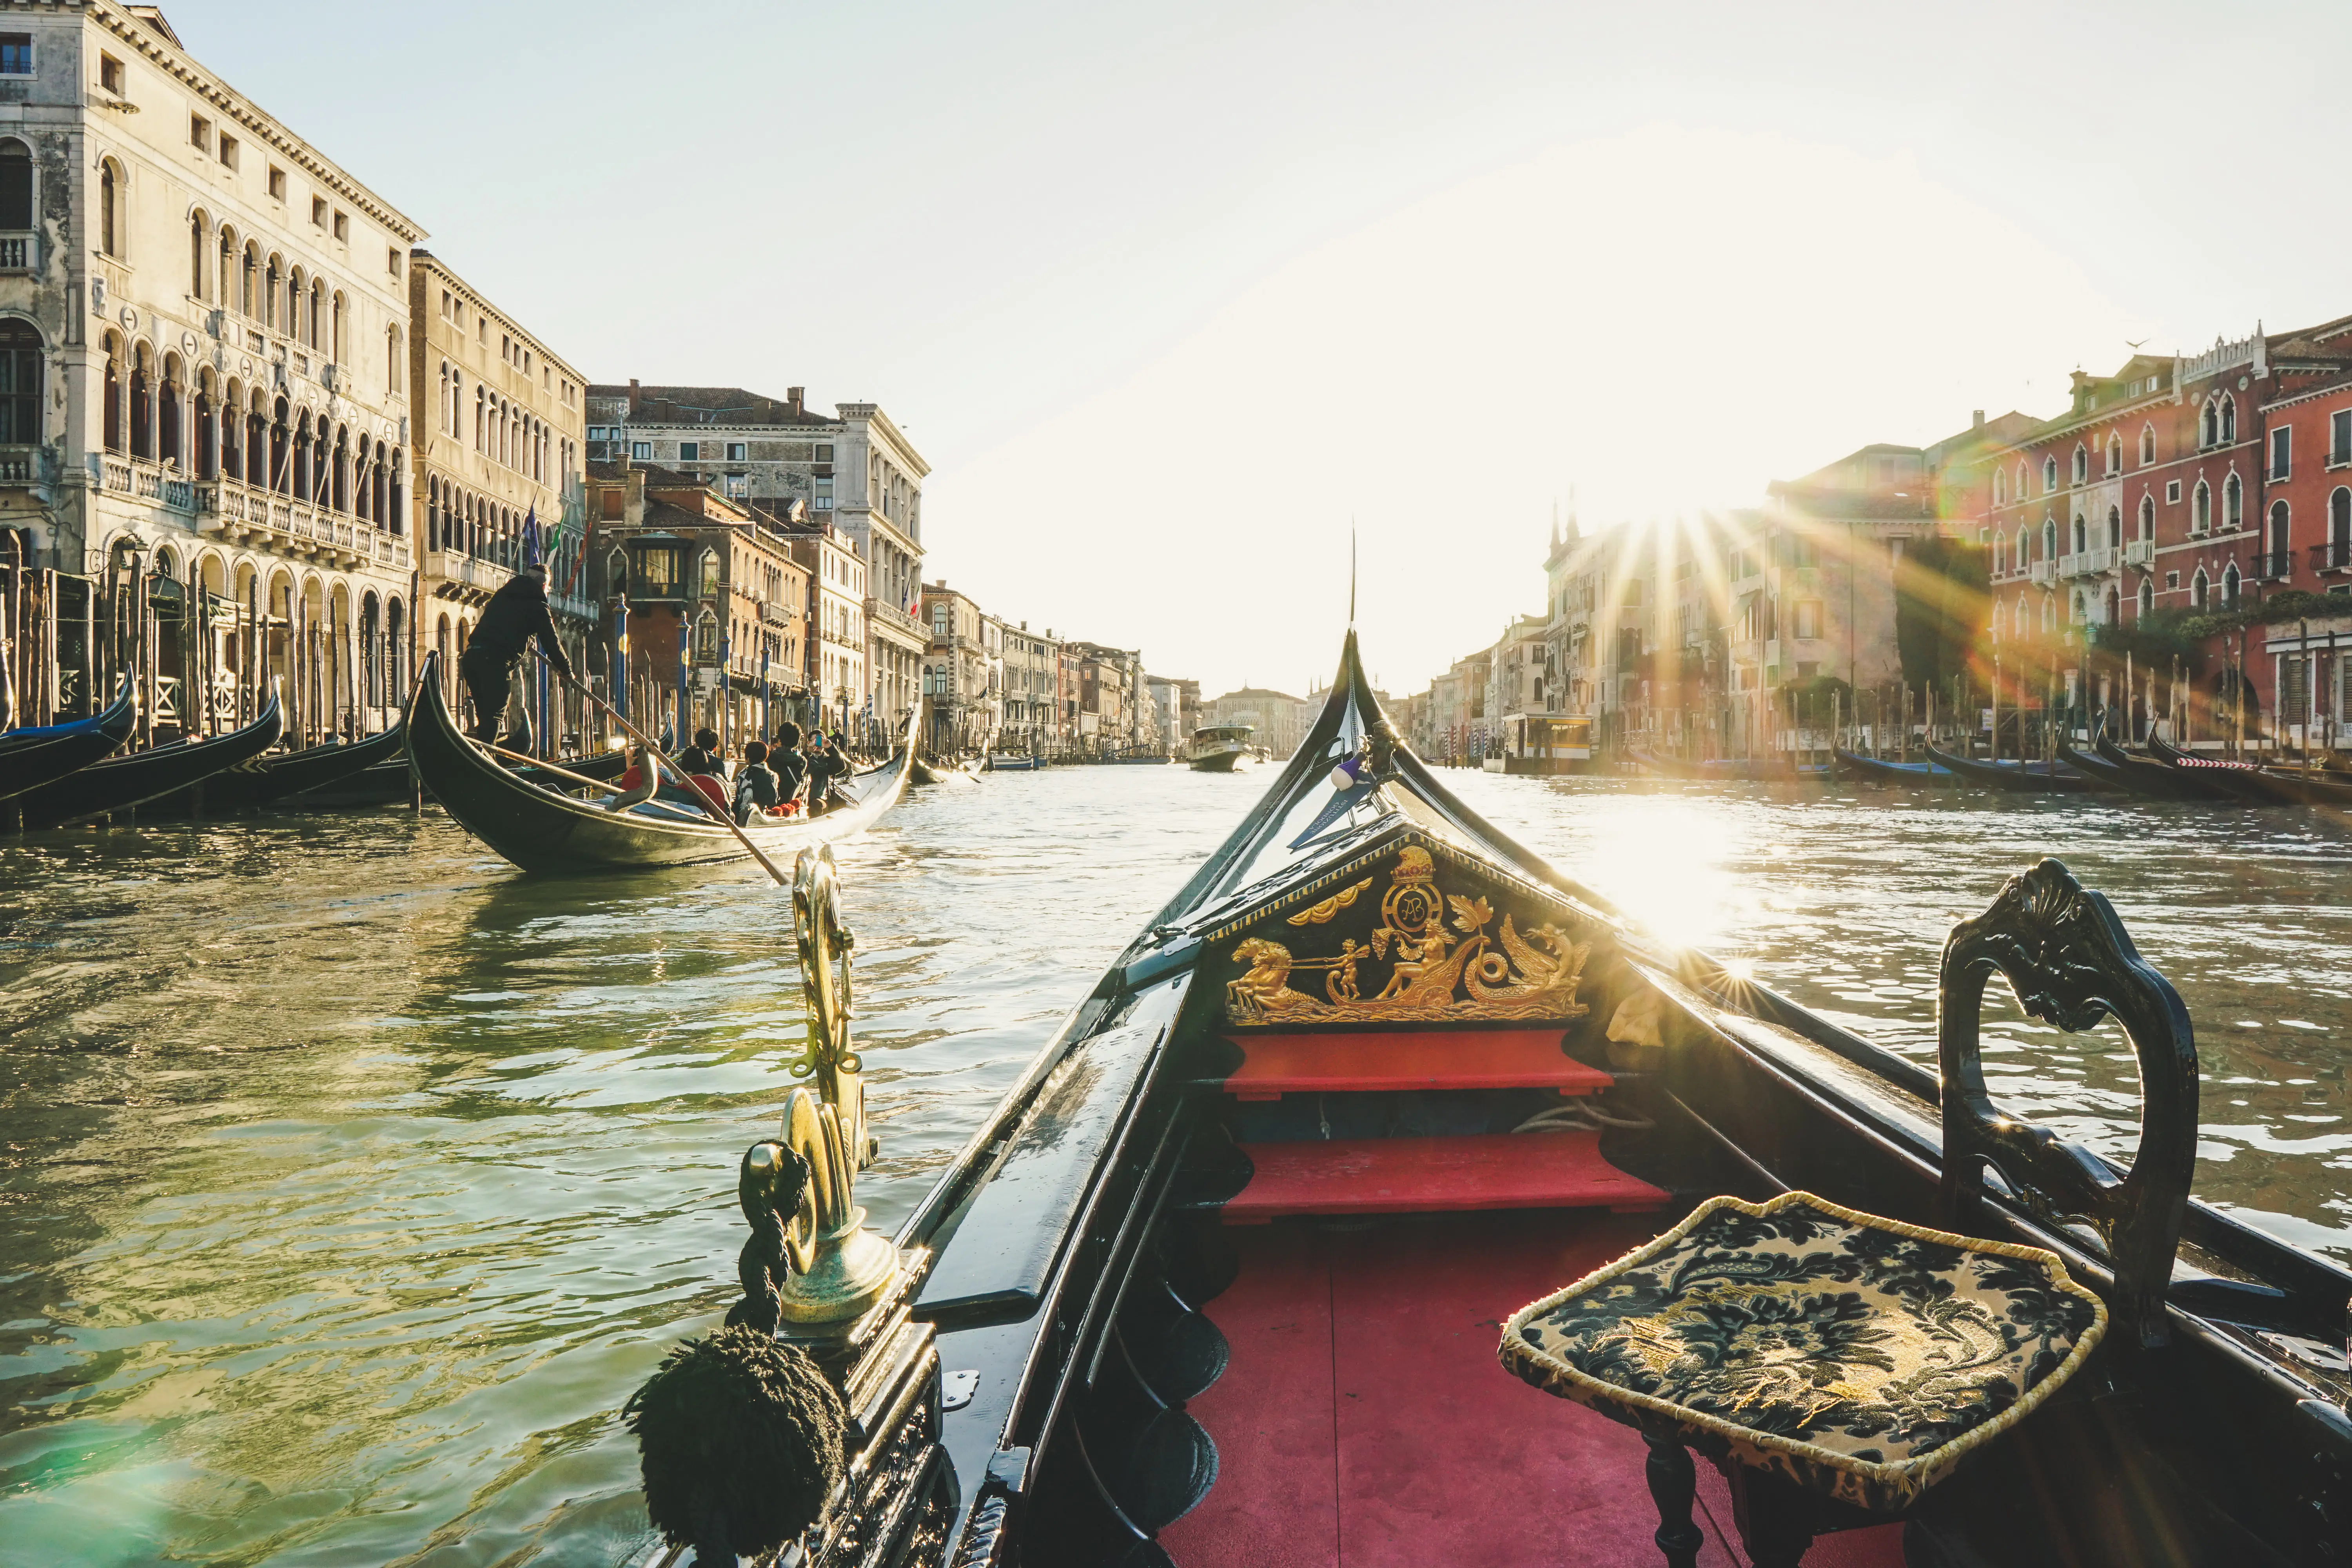 Romantic Gondola Ride in Venice, Italy